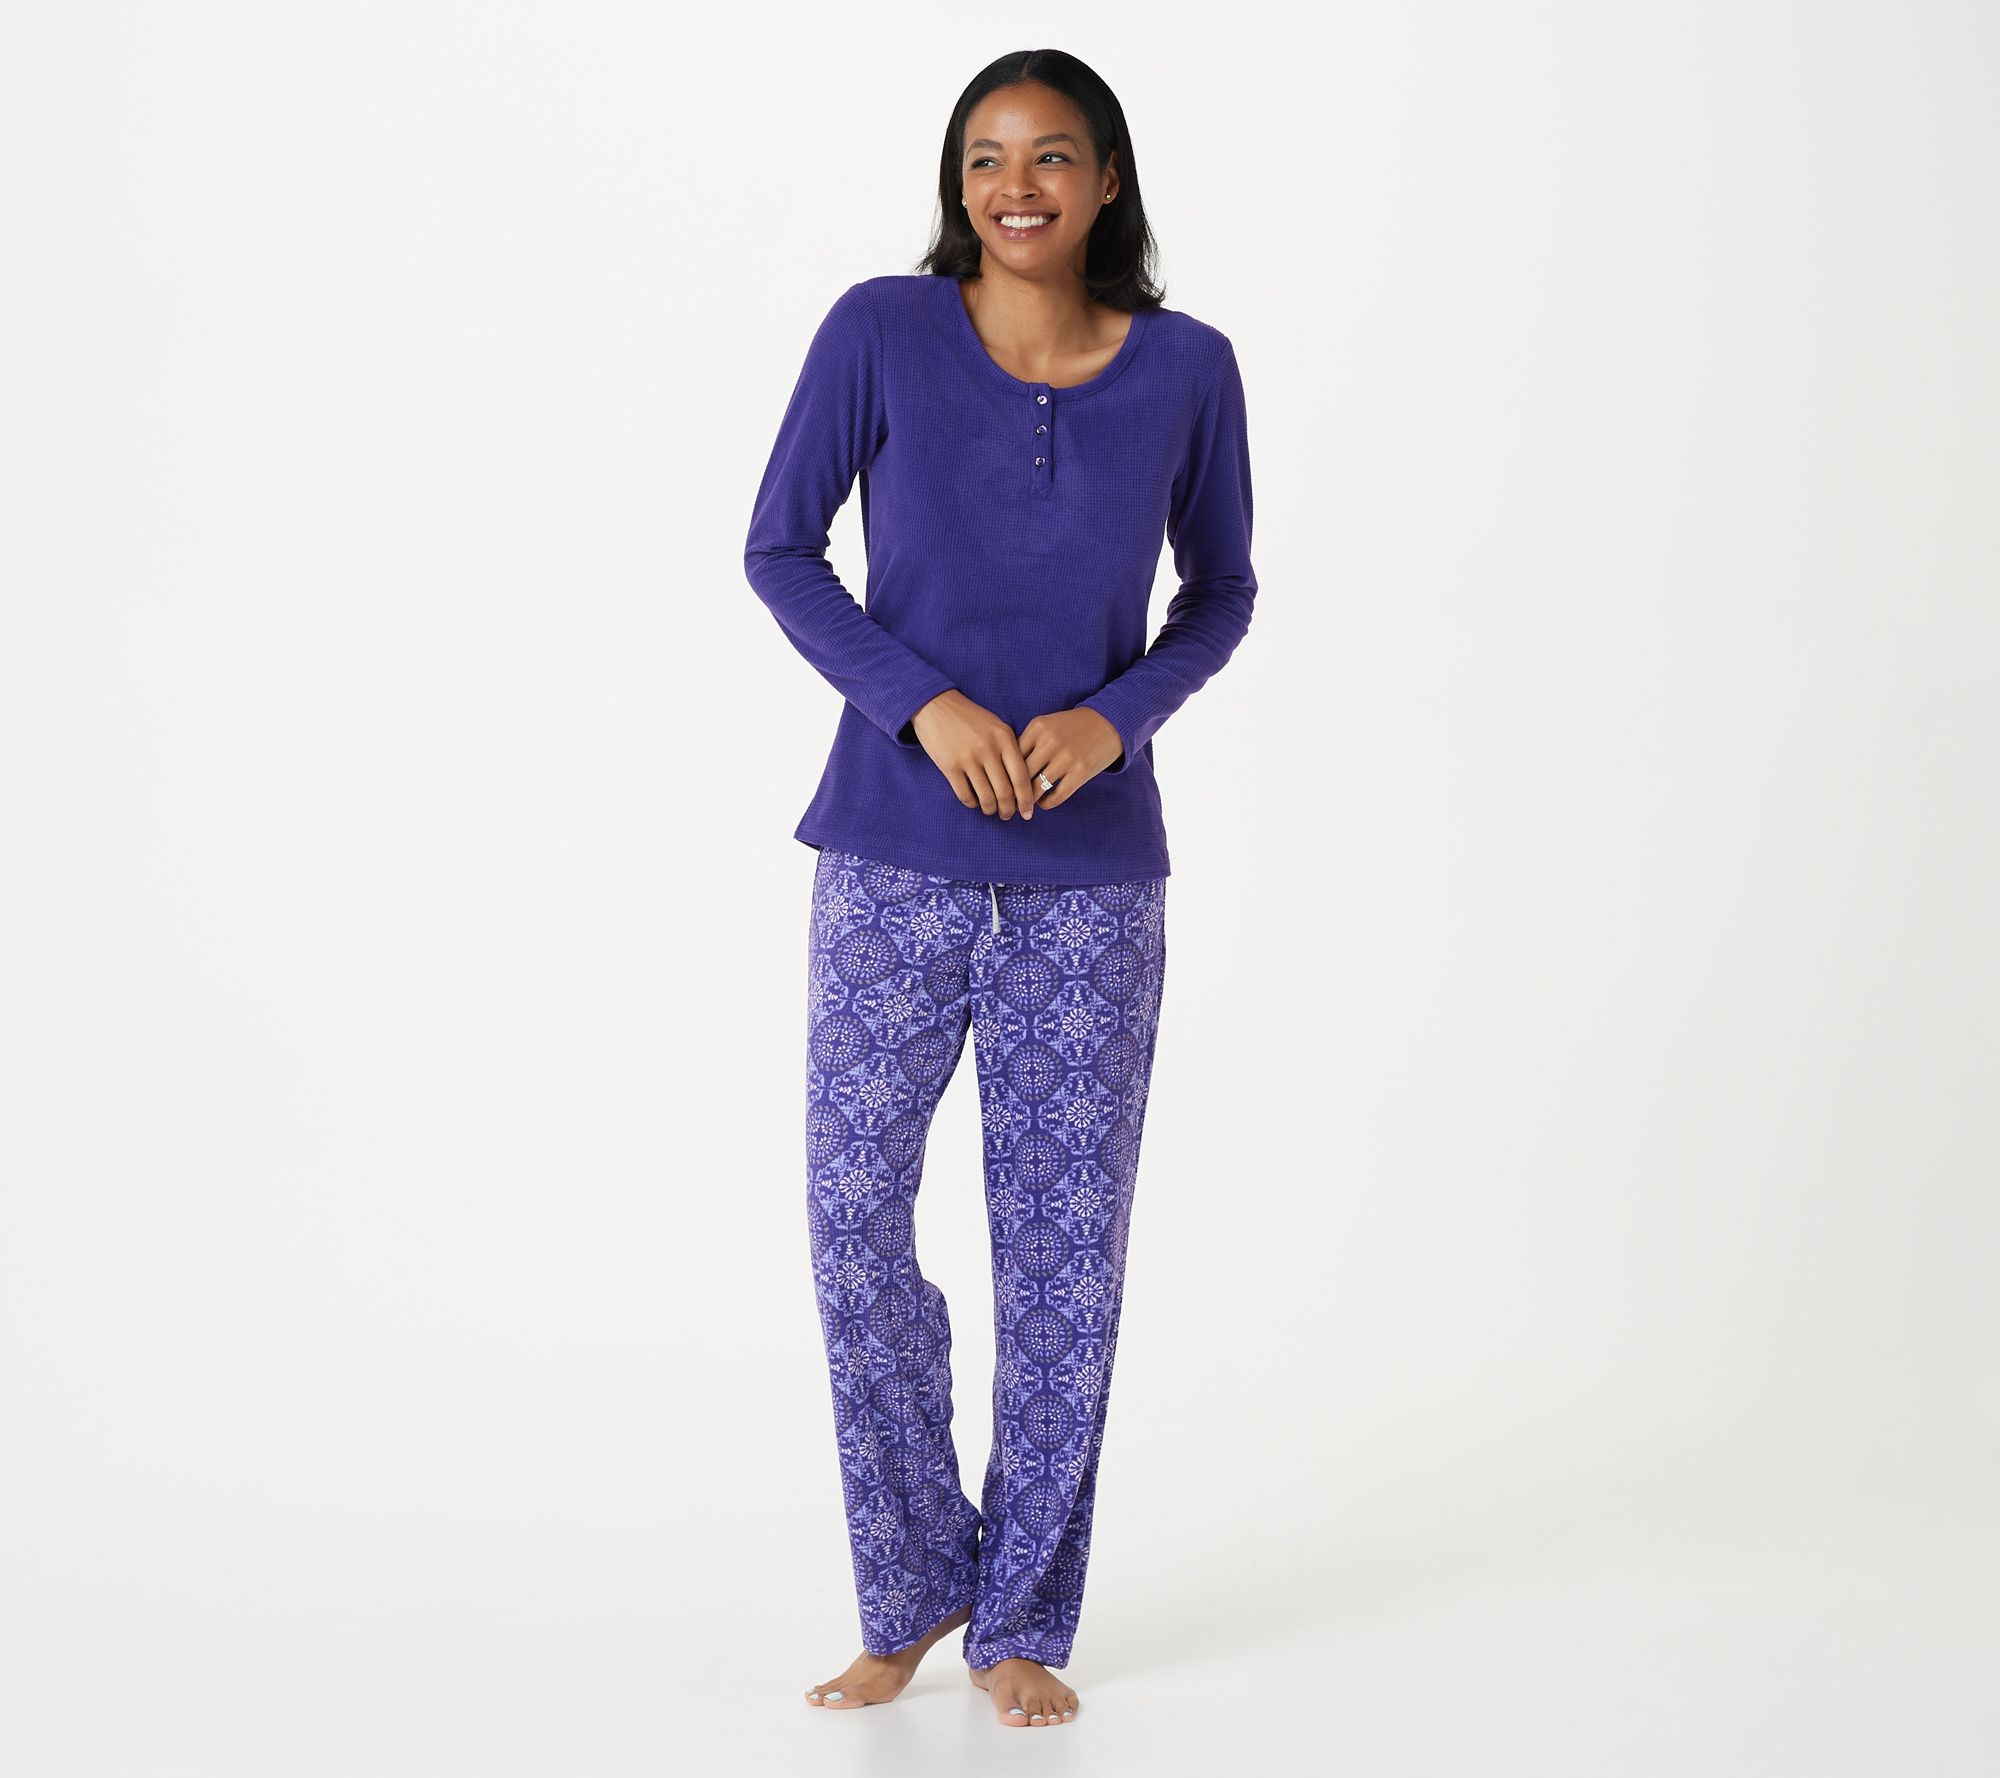 MUK LUKS 3-Piece Fleece Pajama Set with Blanket - QVC.com